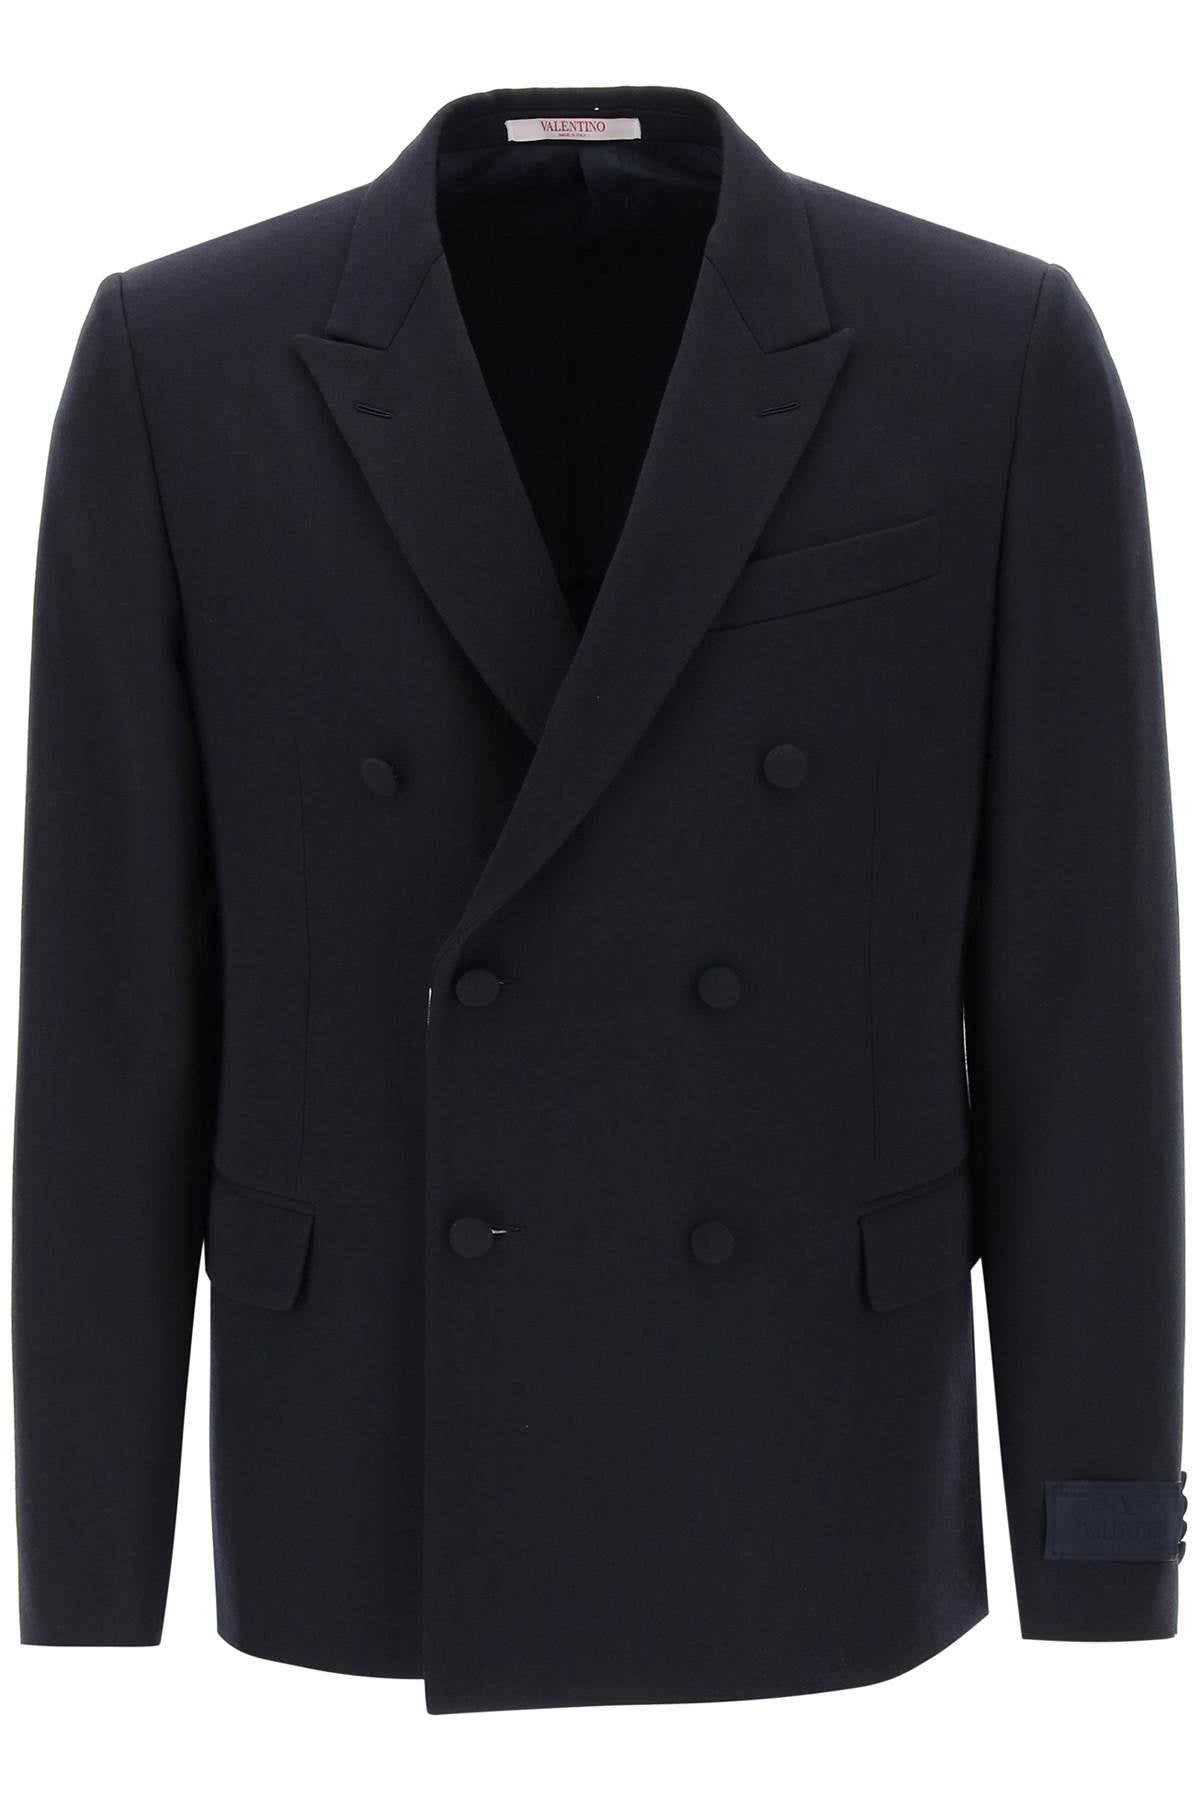 Nine West Suit Blazer Jacket Women's Size 8 Black Half Sleeve Short Sleeve  | eBay